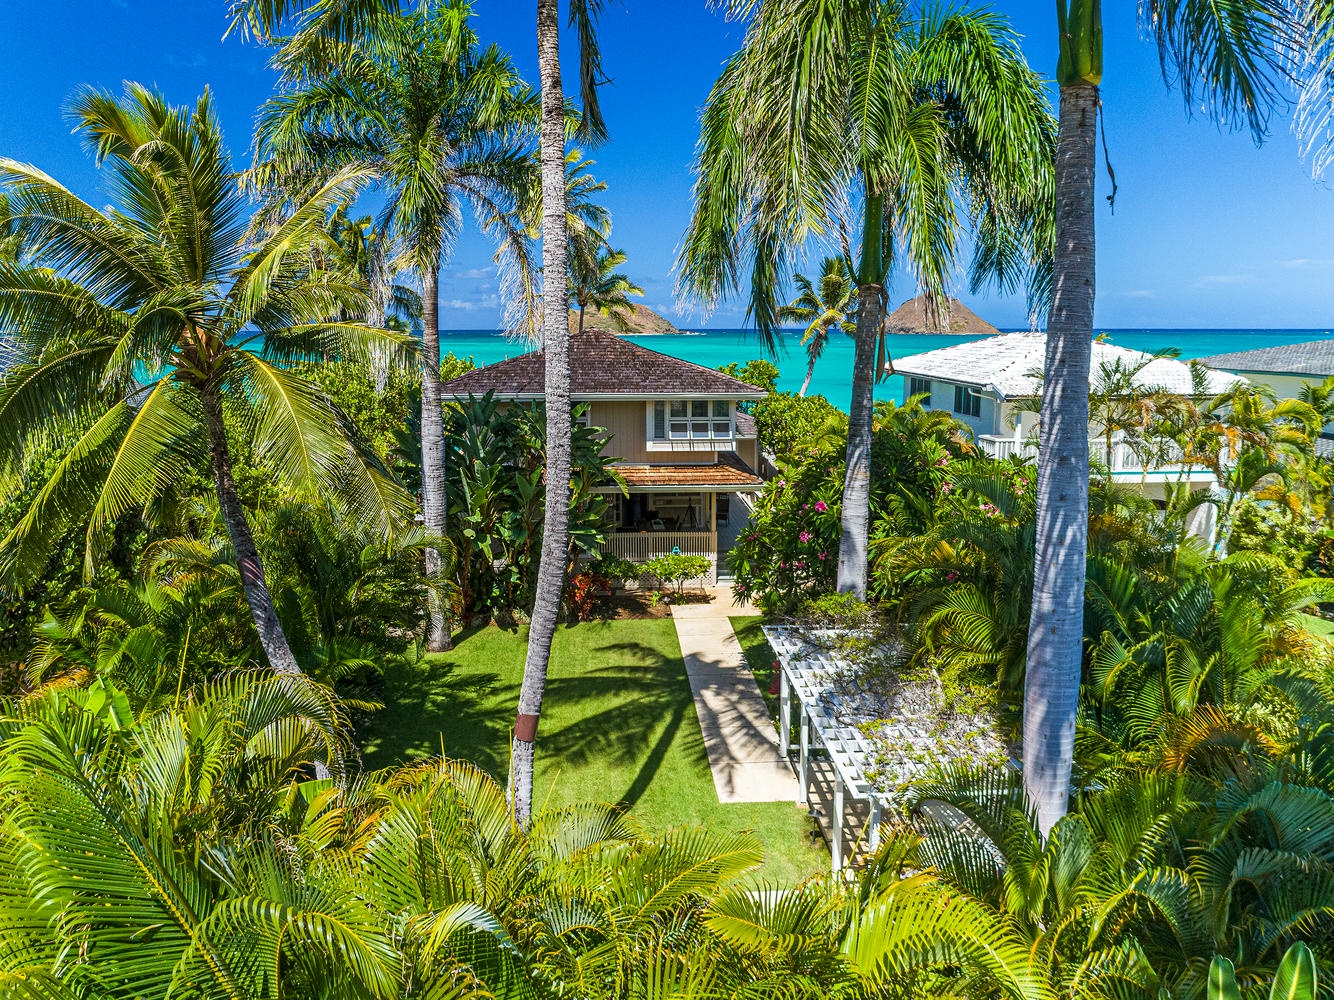 Kailua Vacation Rentals, Lanikai Seashore - Tropical, two-story vacation rental just steps away from the renowned Lanikai Beach